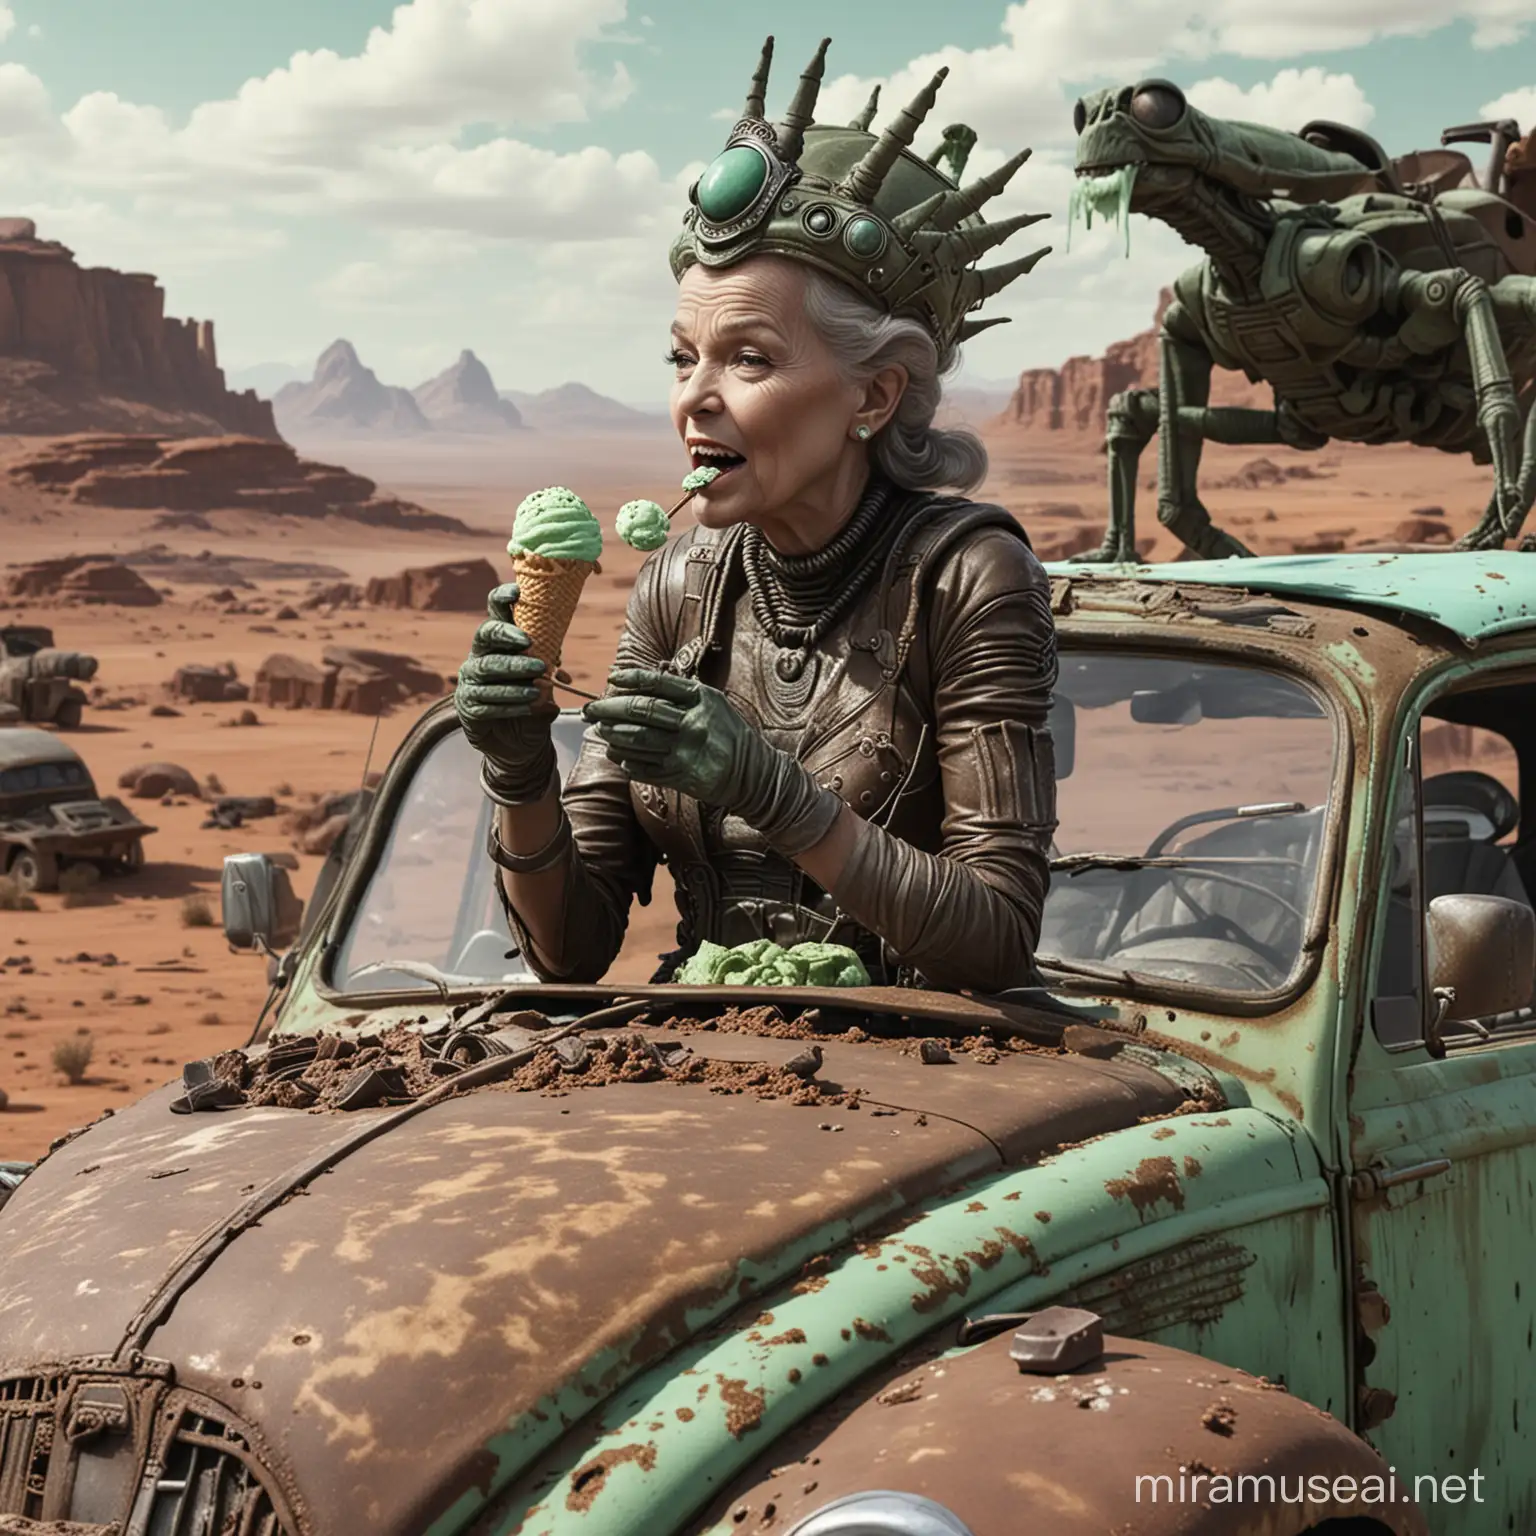 Alien Queen atop Rusty VW Beetle with Mint Chocolate Ice Cream on Alien Planet